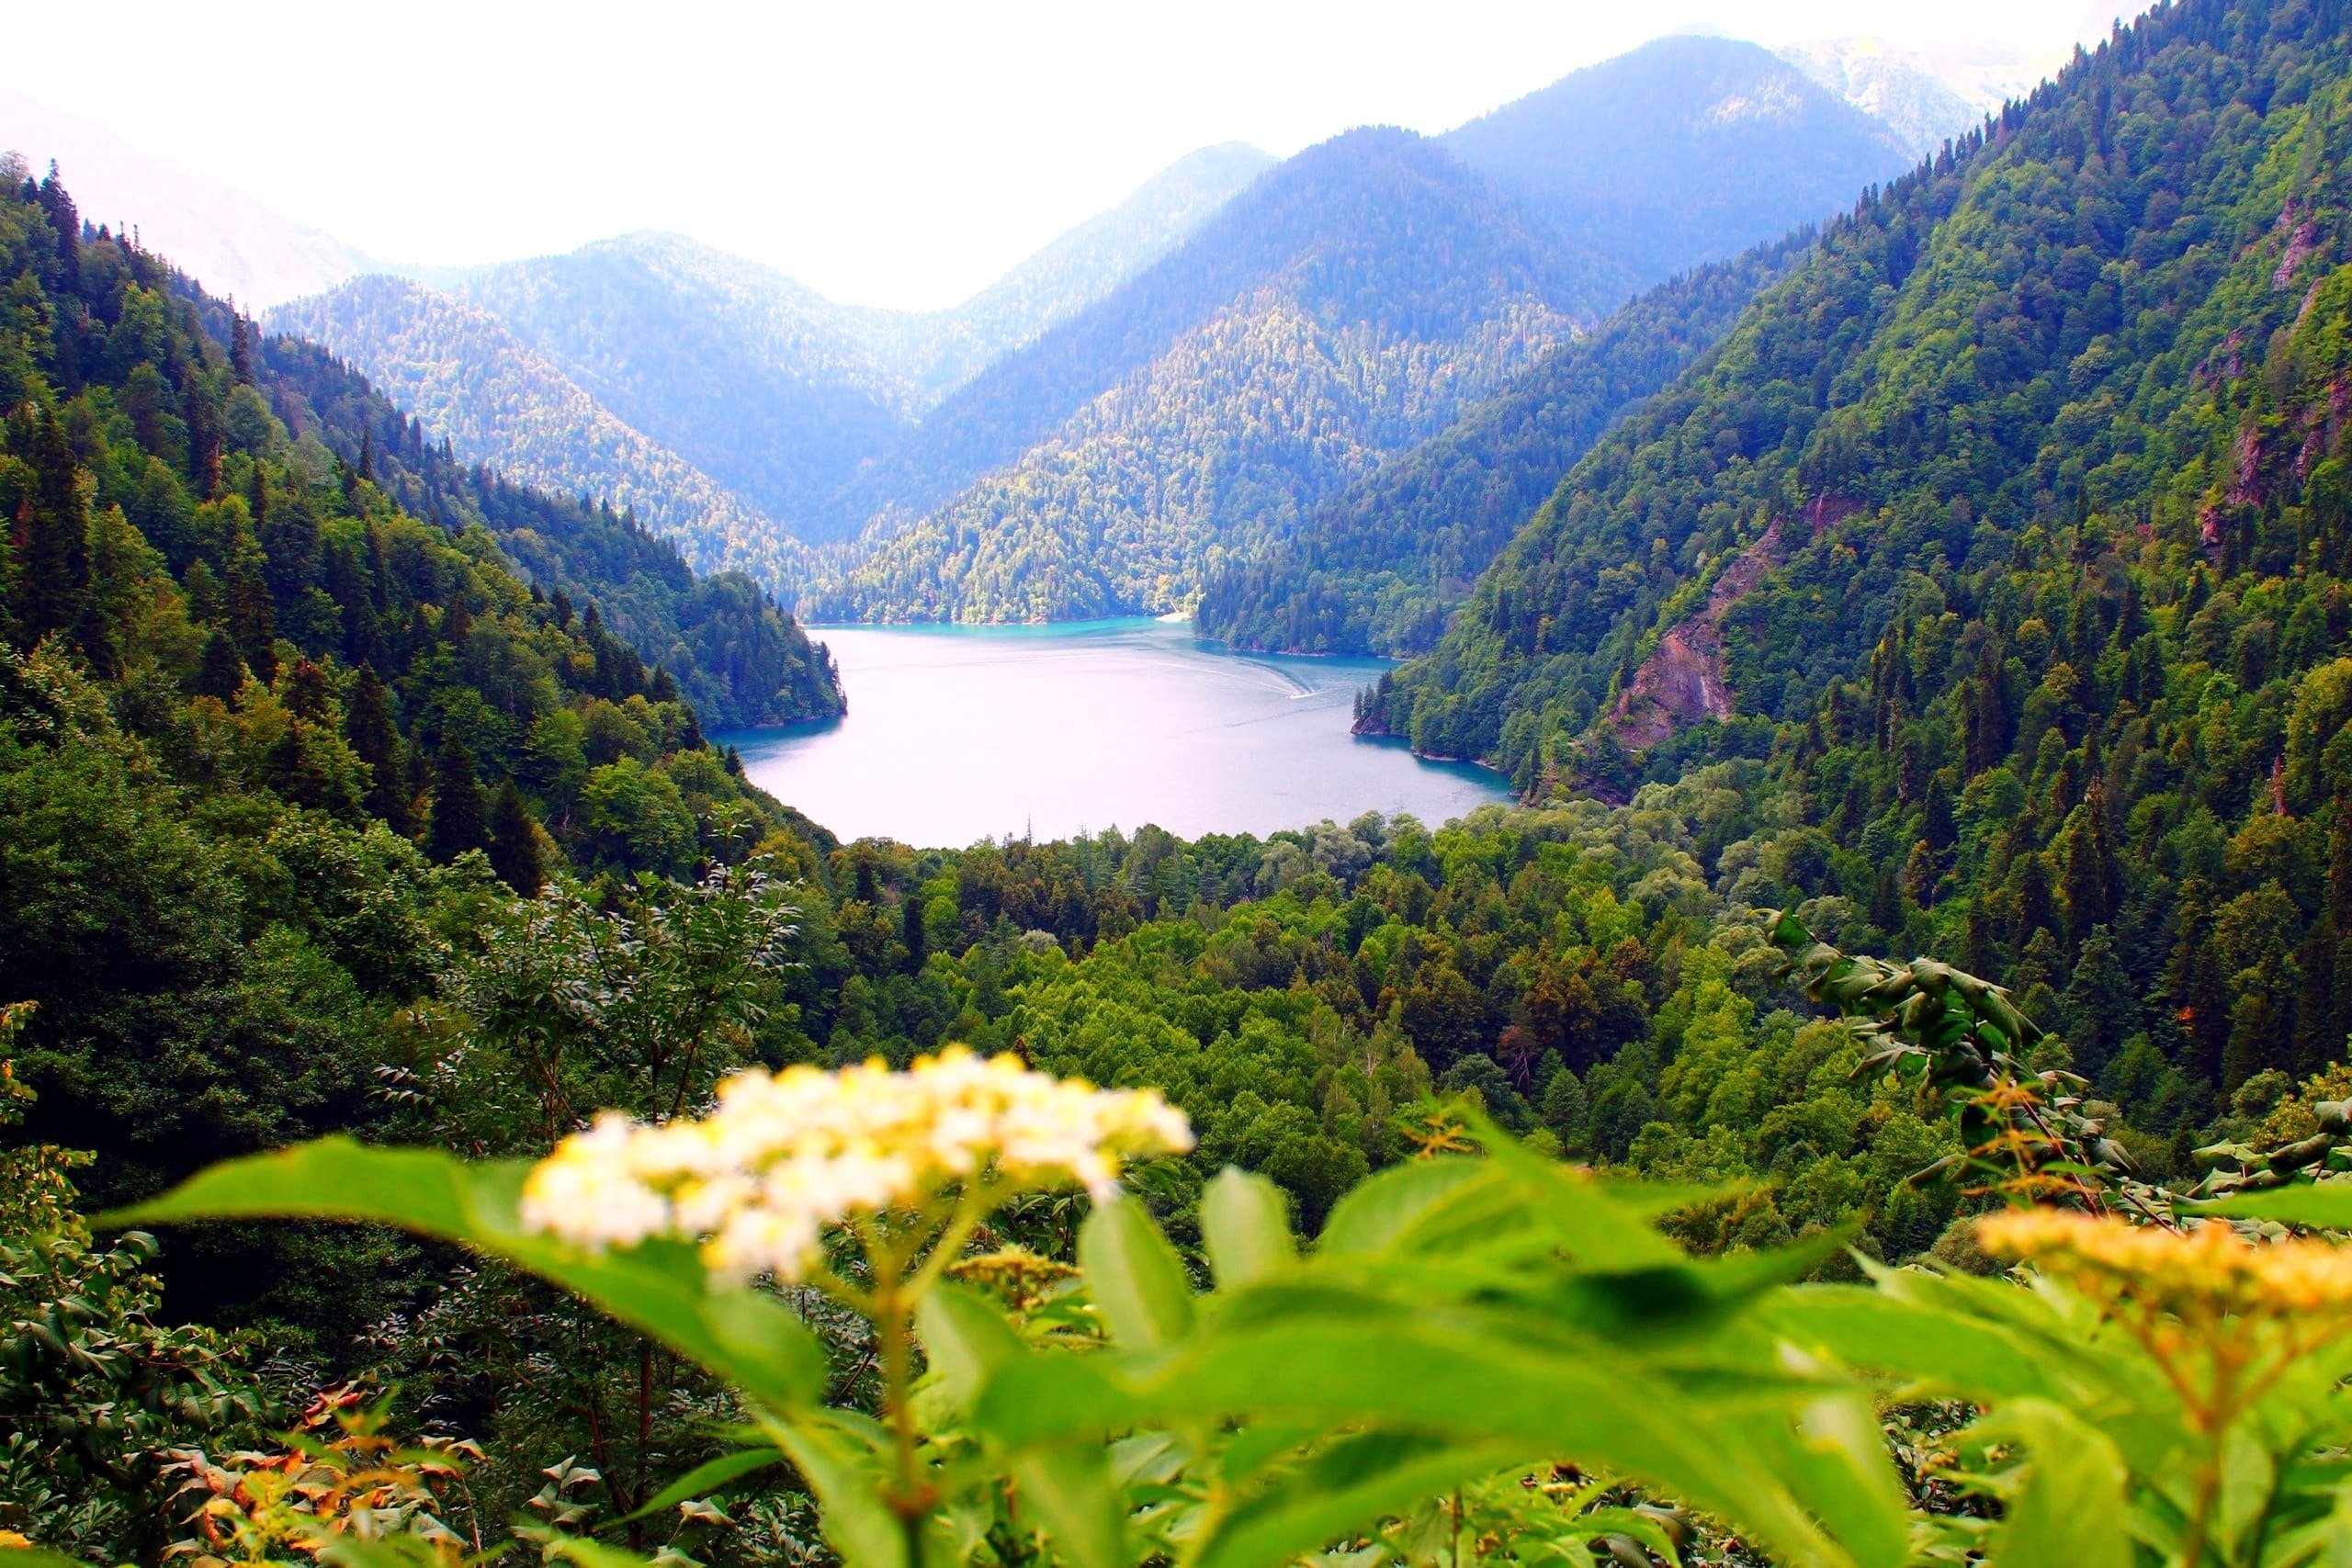 Интересные факты об абхазии. Абхазия Рица. Река Рица Абхазия. Горы Абхазии Рица. Абхазия Гагры озеро Рица.